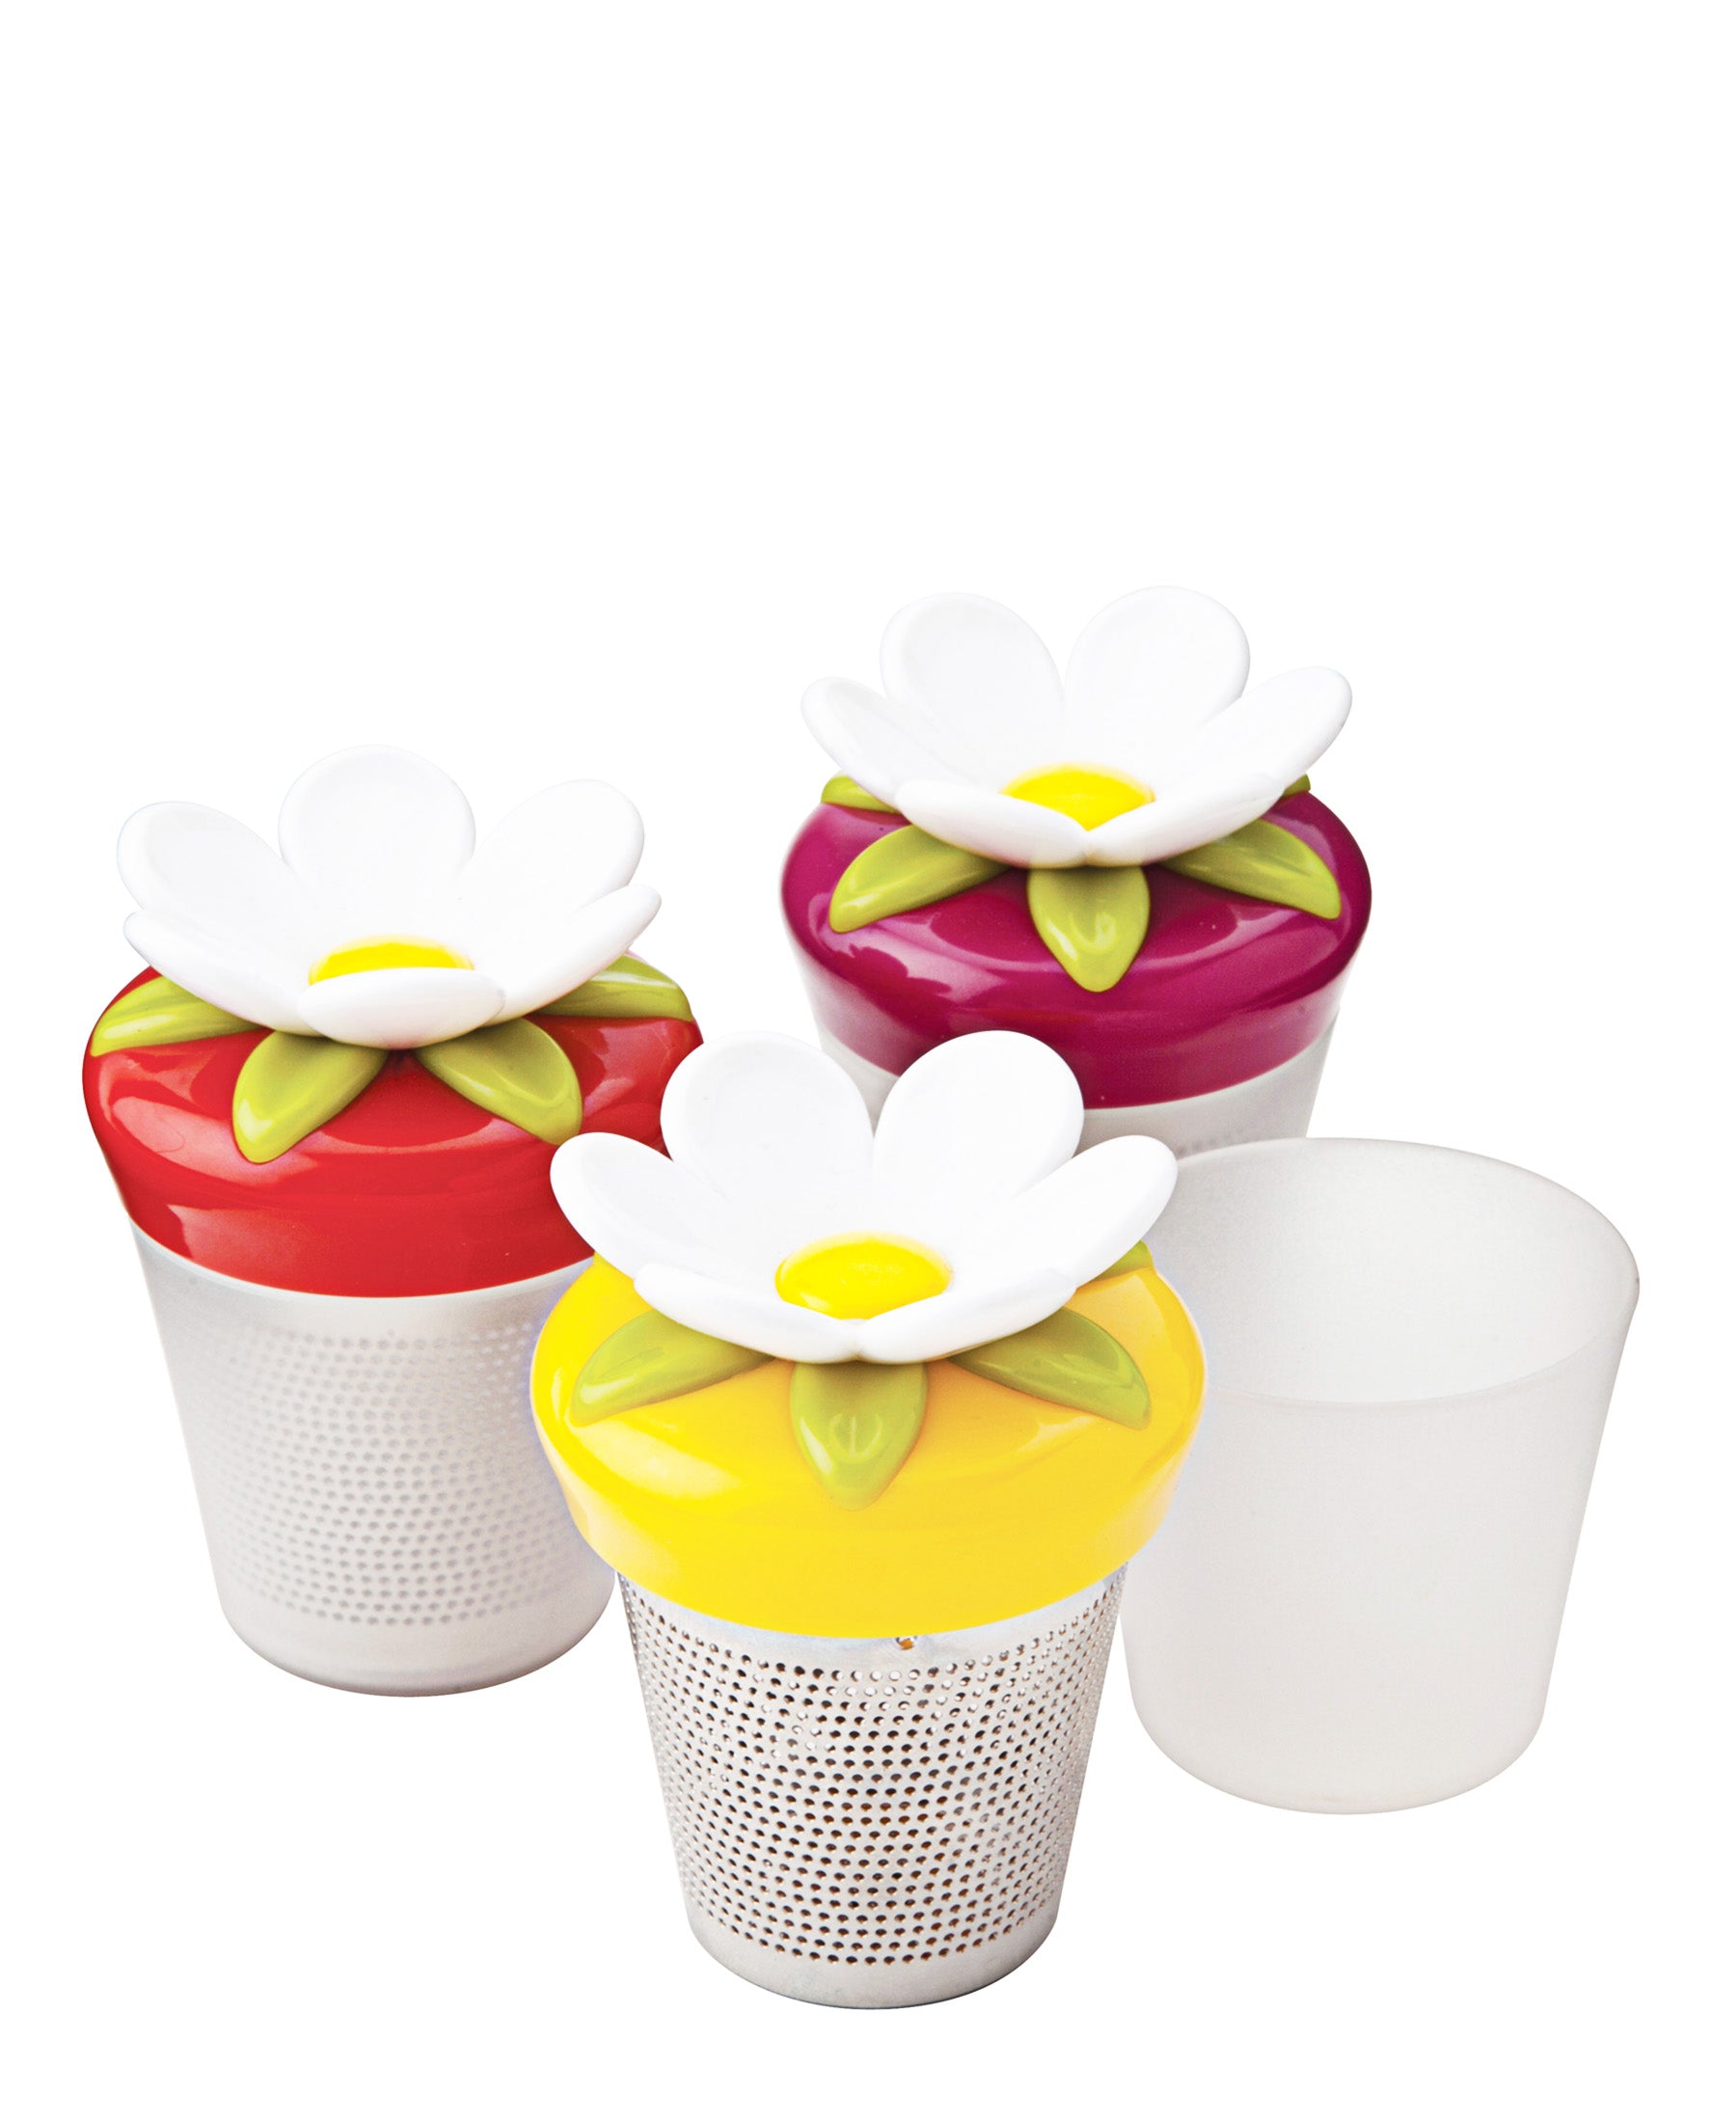 Joie Msc Bloom Floating Tea Cup Infuser - Assorted